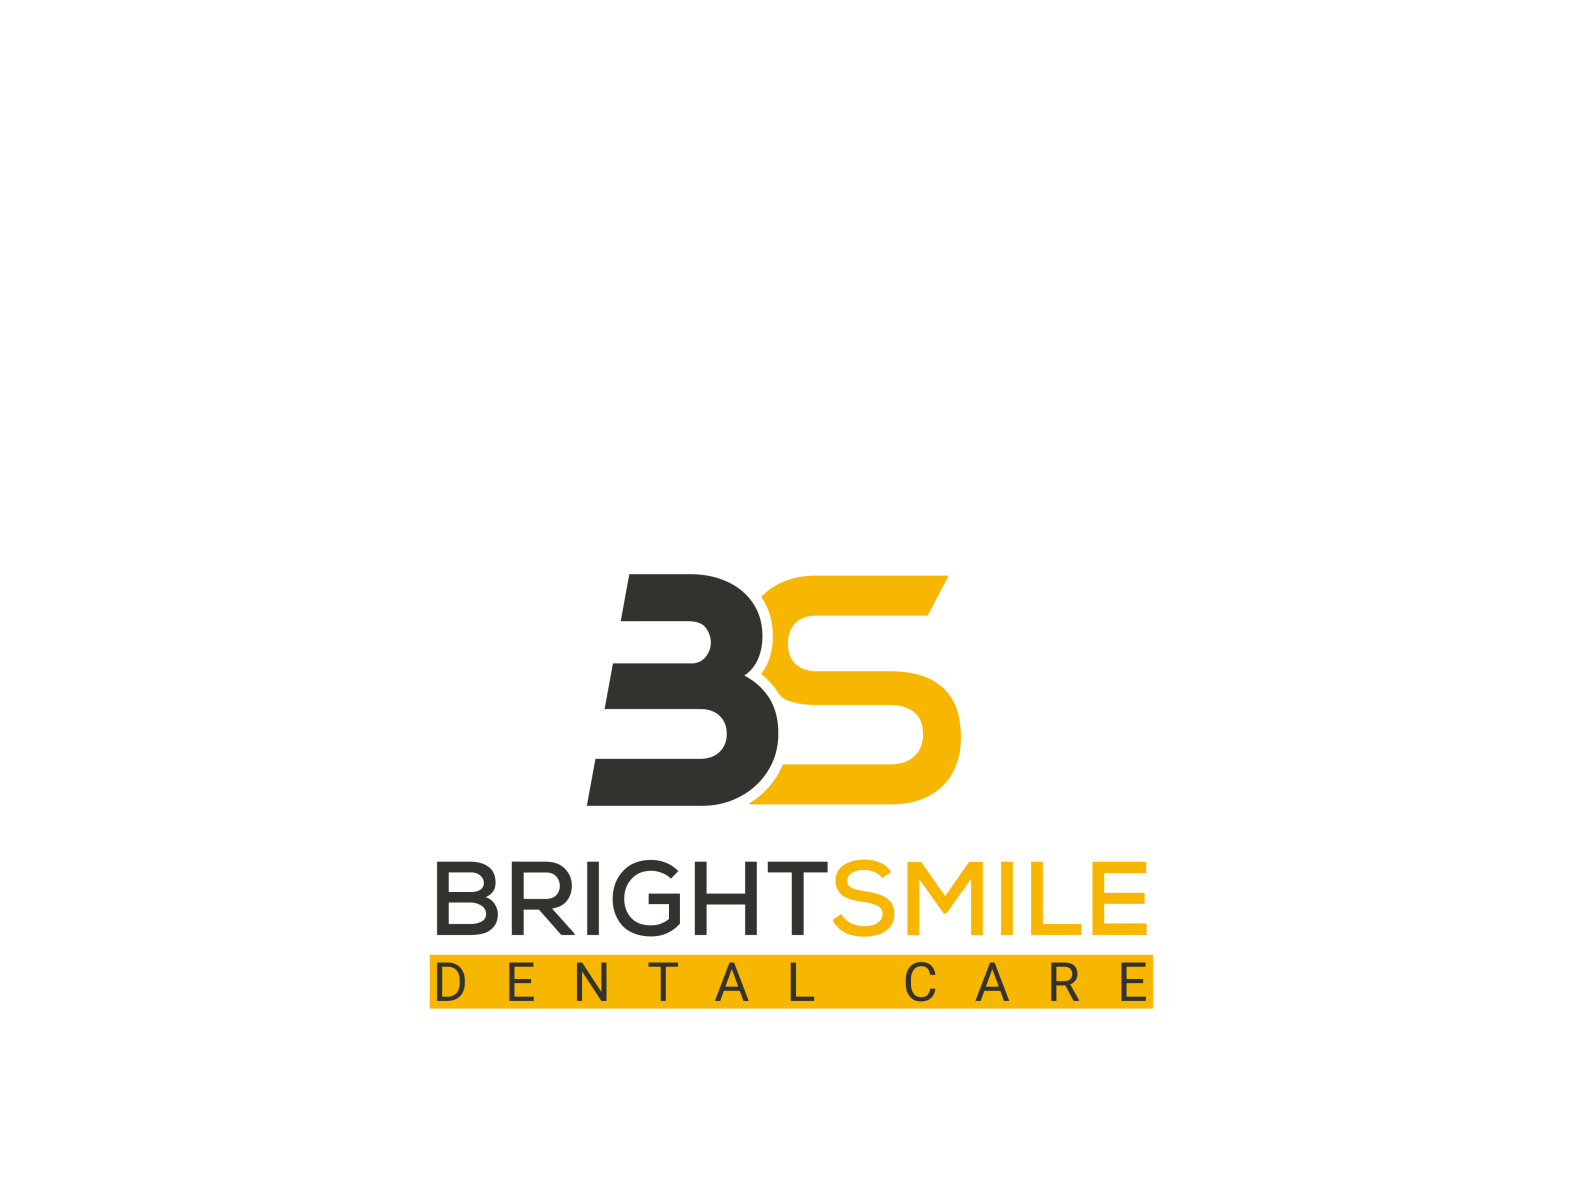 Bs Letter Logo Brightsmile Dental Care By Rezaul Islam On Dribbble